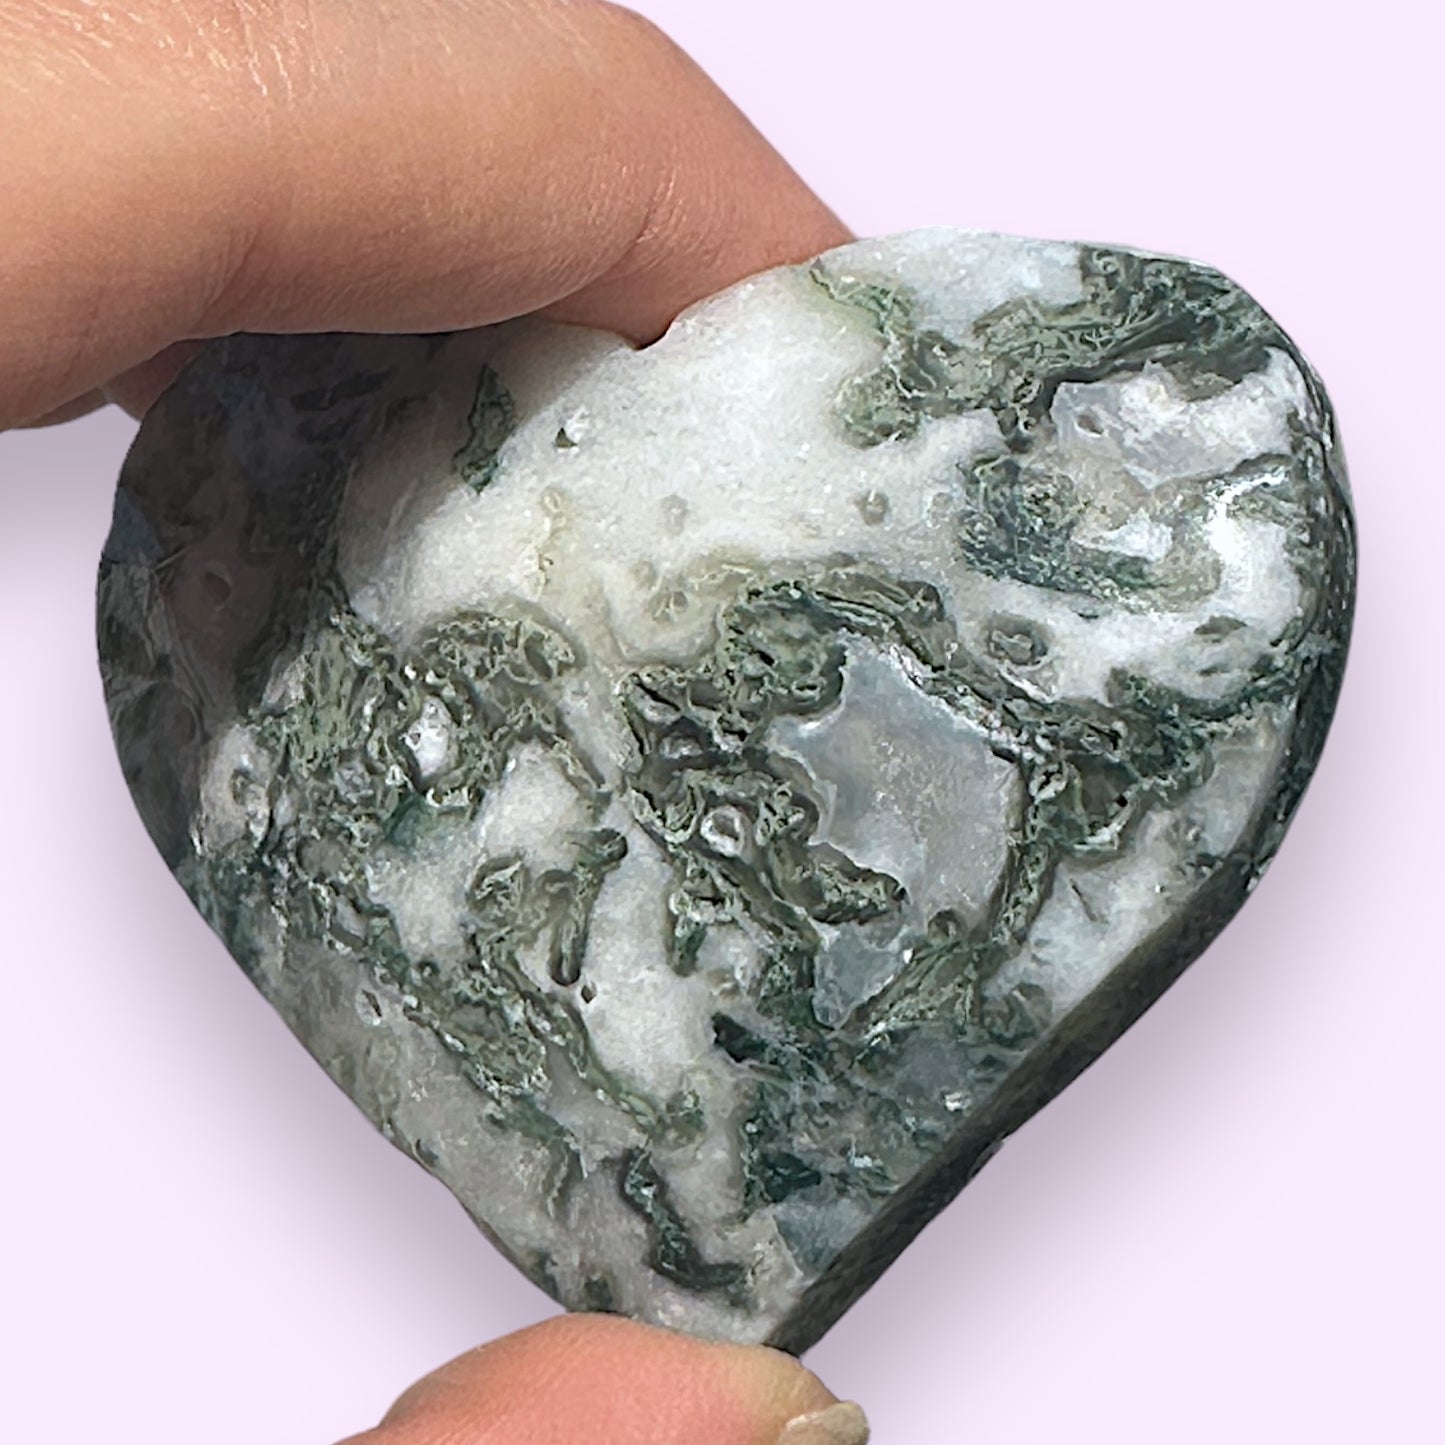 Moss Agate Crystal Heart - 1007K